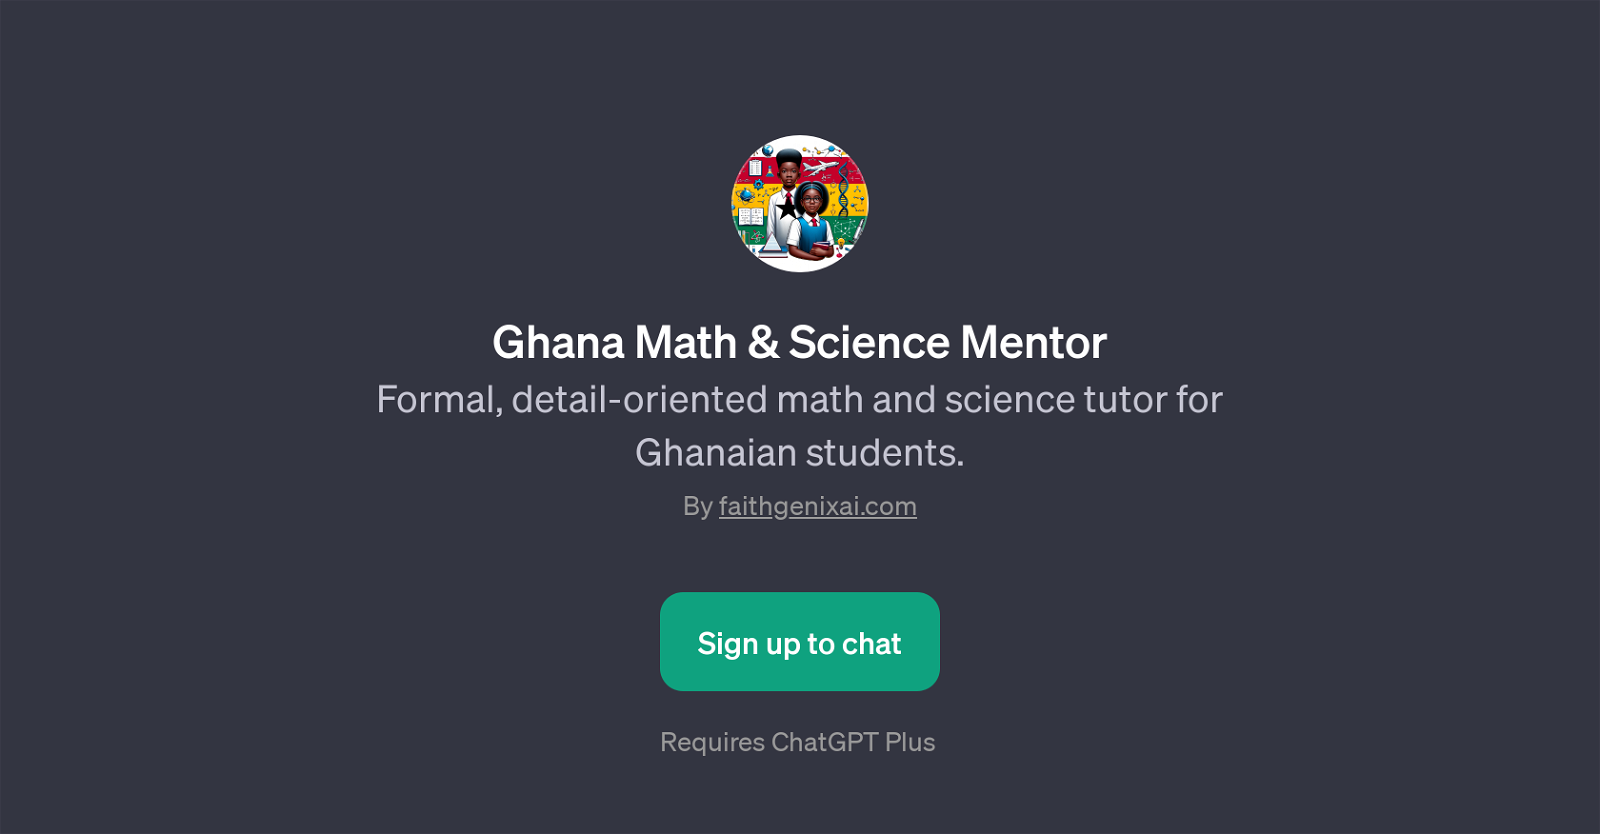 Ghana Math & Science Mentor website